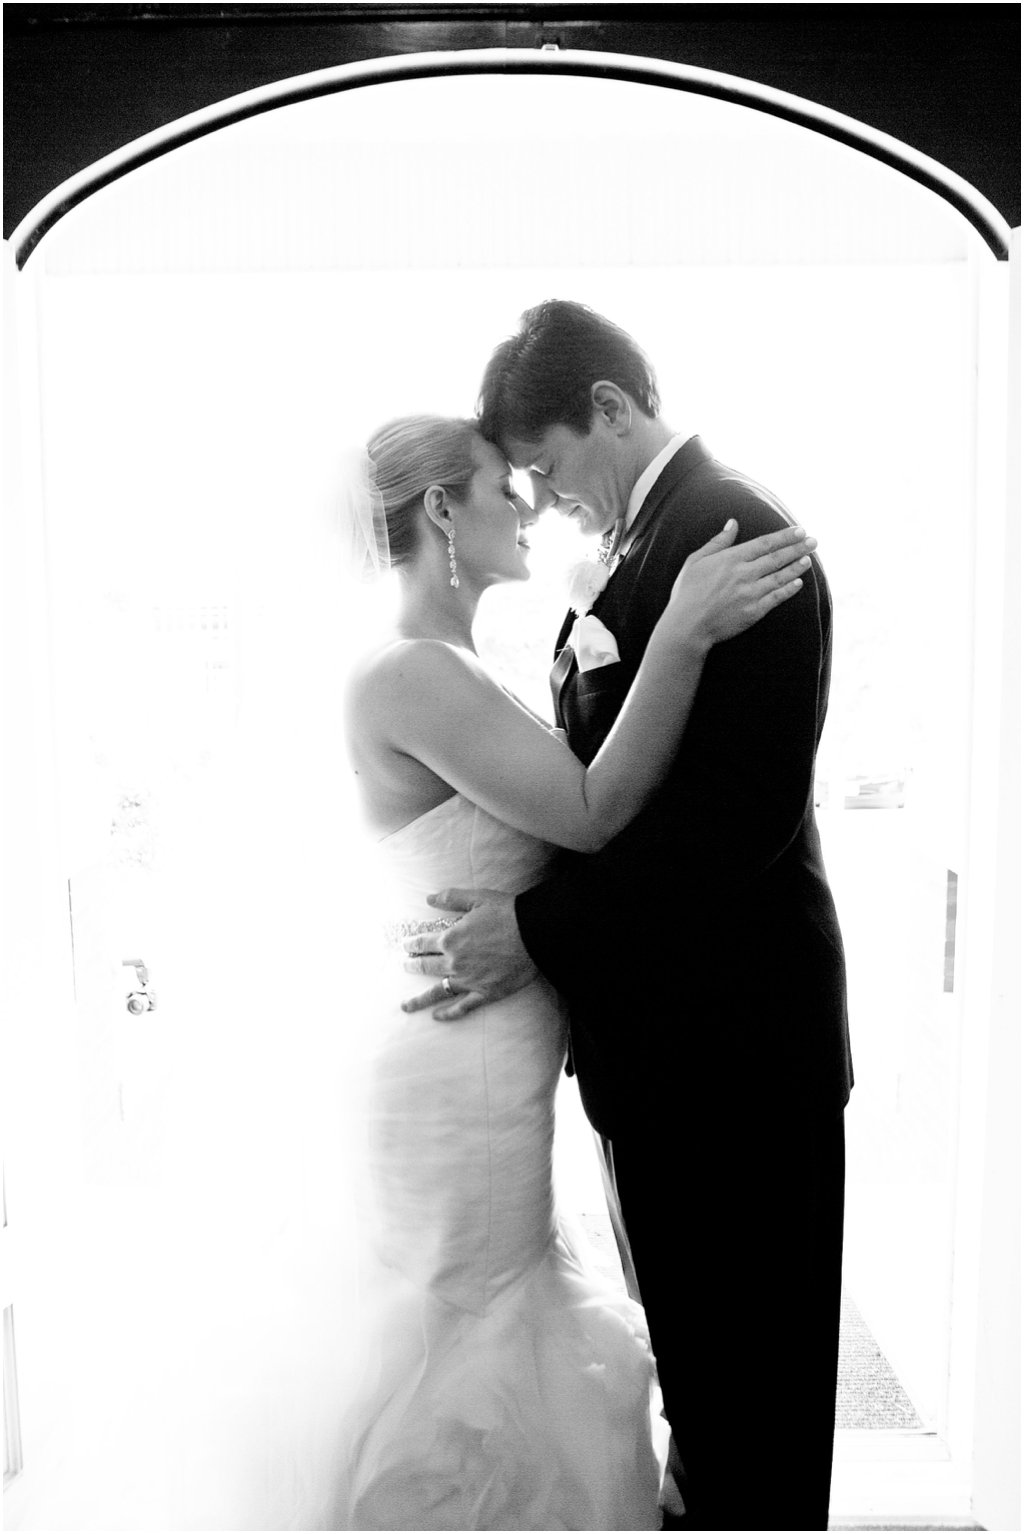 View More: http://maryfieldsphotography.pass.us/gilbert-wedding-6-21-14